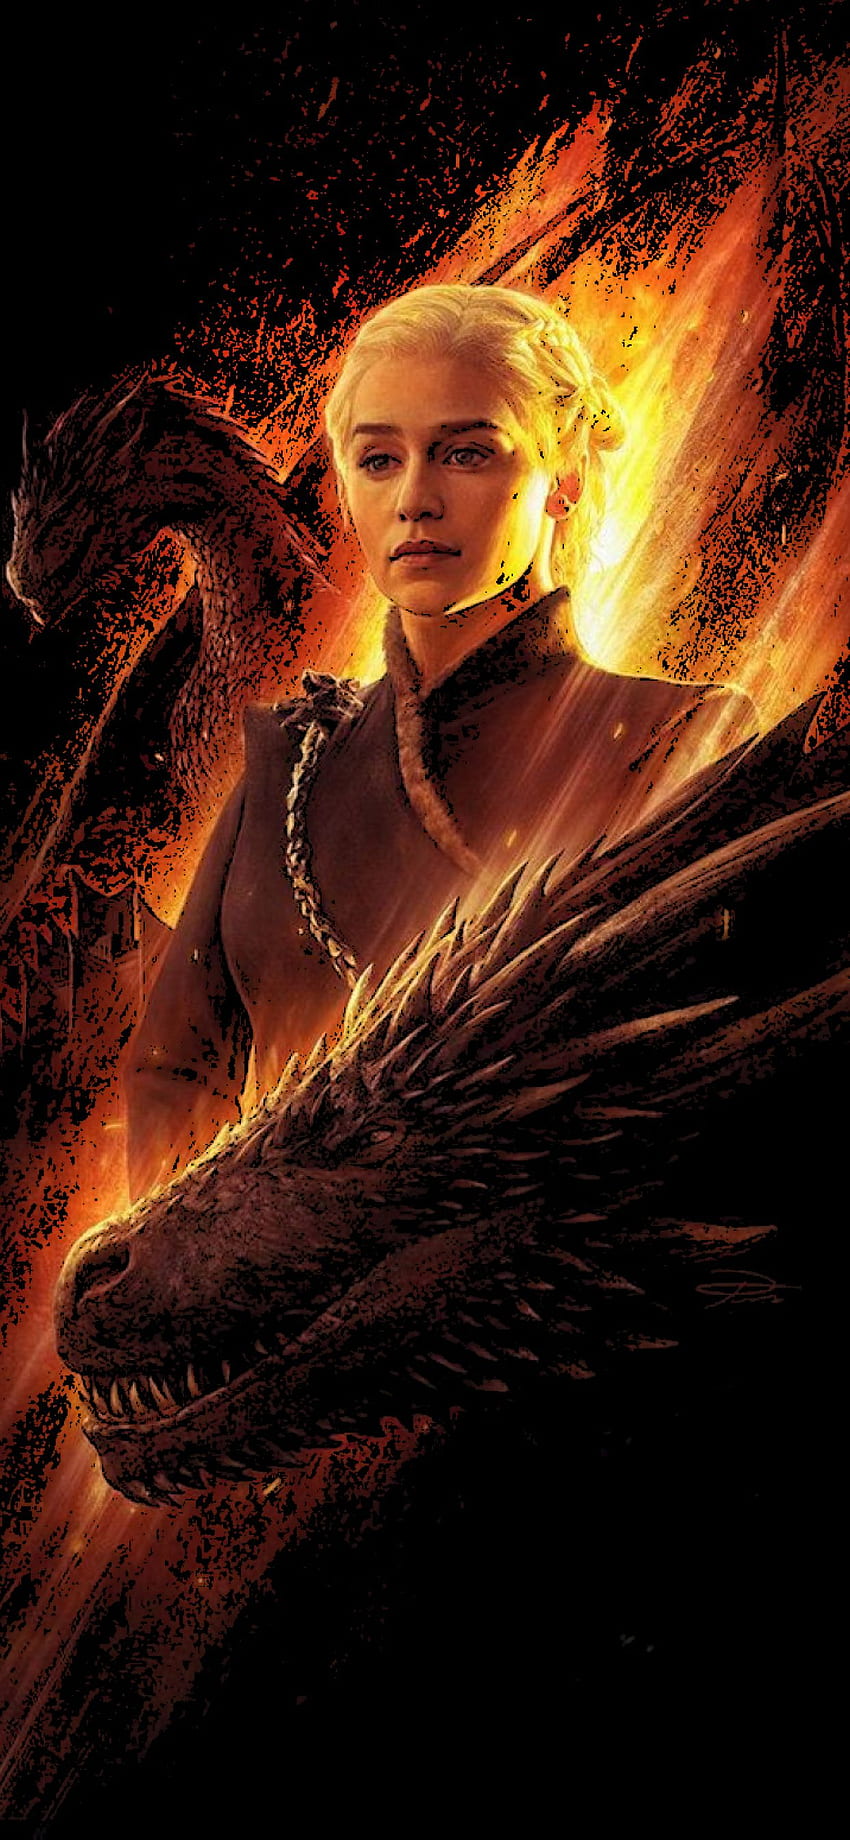 Daenerys Targaryen Juego de tronos - y antecedentes, Dany Juego de tronos fondo de pantalla del teléfono